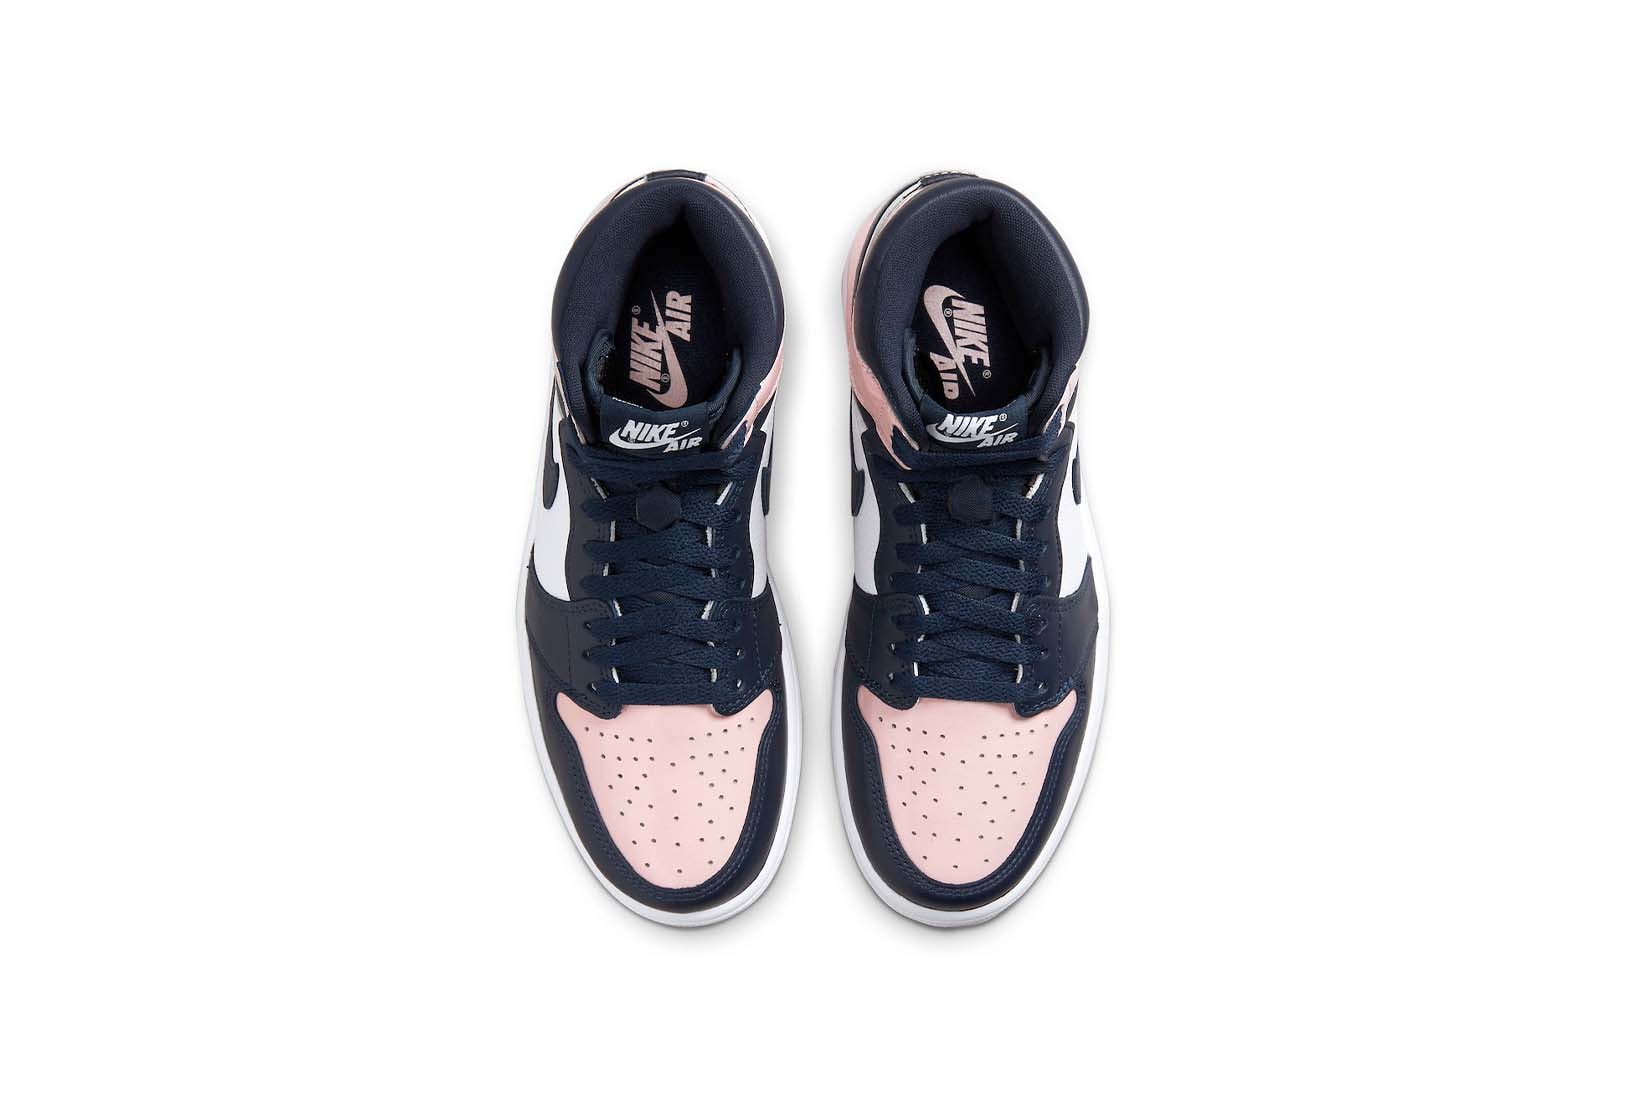 Nike Air Jordan 1 High OG Atmosphere Bubblegum Women's Price Holiday Release Date